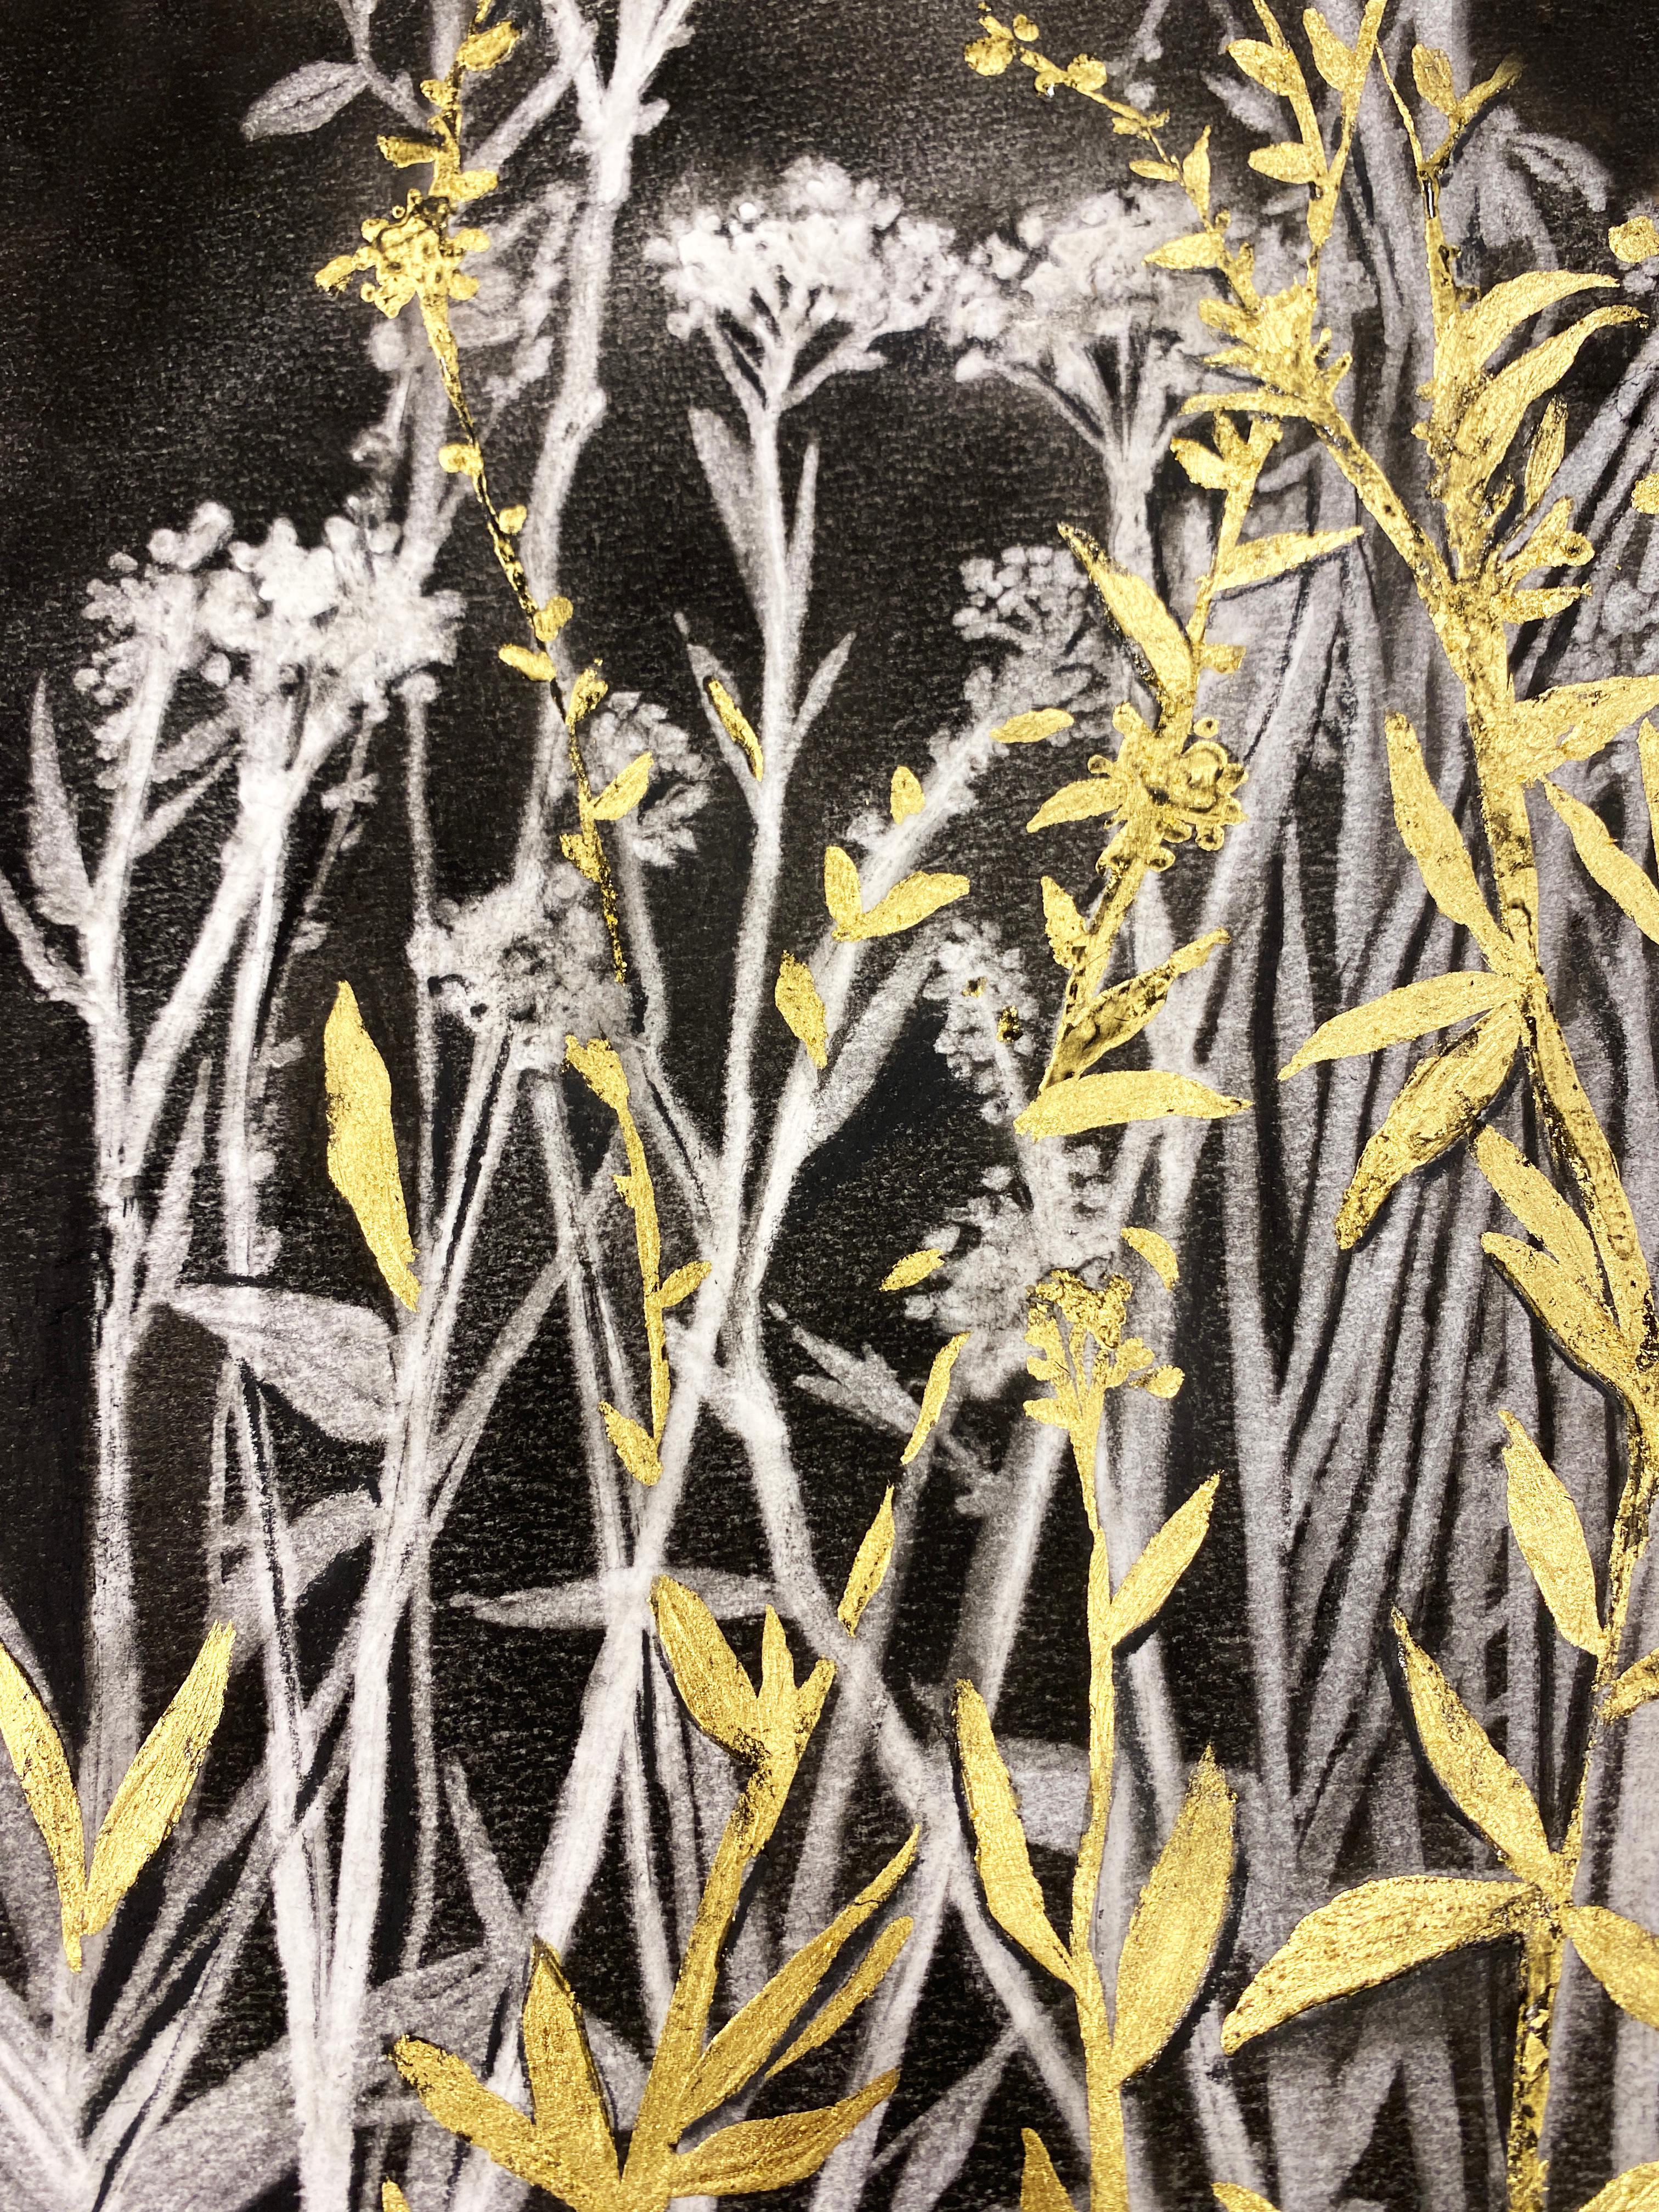 Black & White Botanical Charcoal Drawing with Gold Leaf in Metal Hexagon Frame - Art by Rachel Kohn